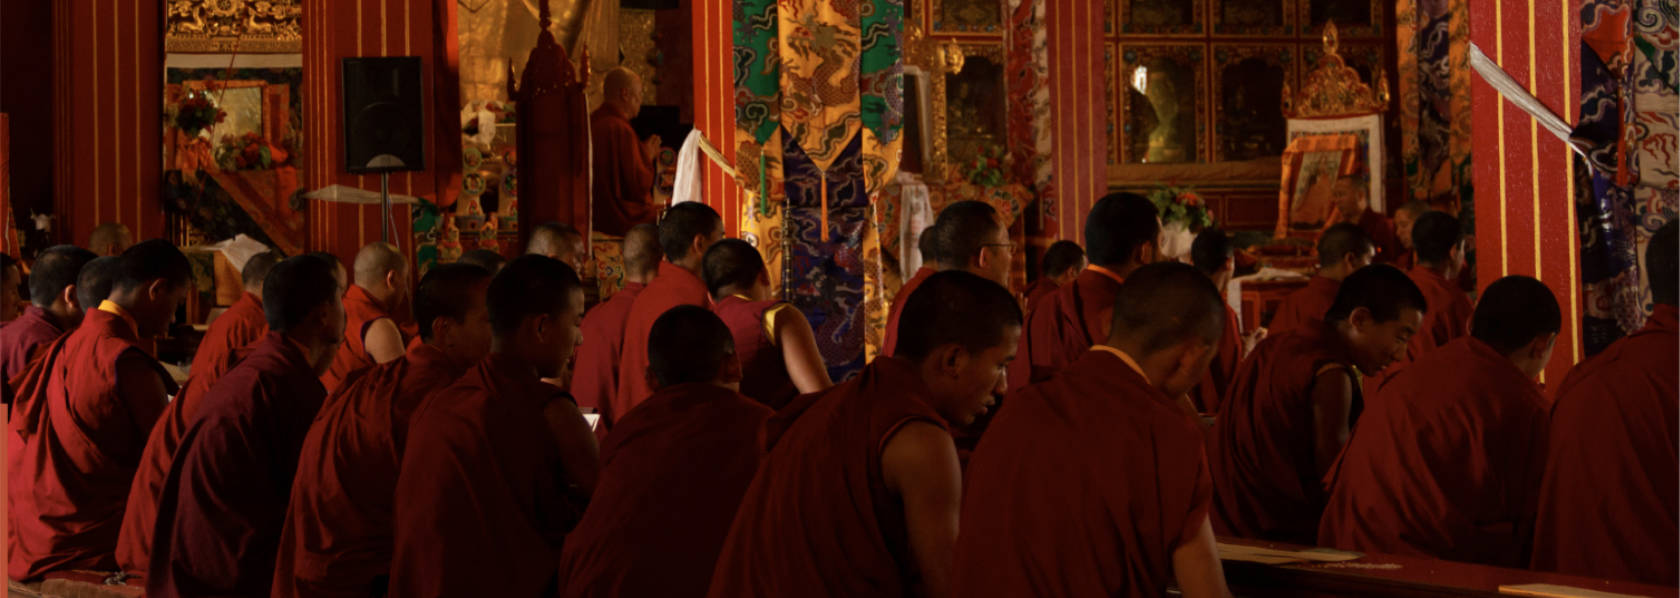 TUKDAM BETWEEN WORLDS - Tibetan monks gathered in colourful monastery - THIS Buddhist Film Festival